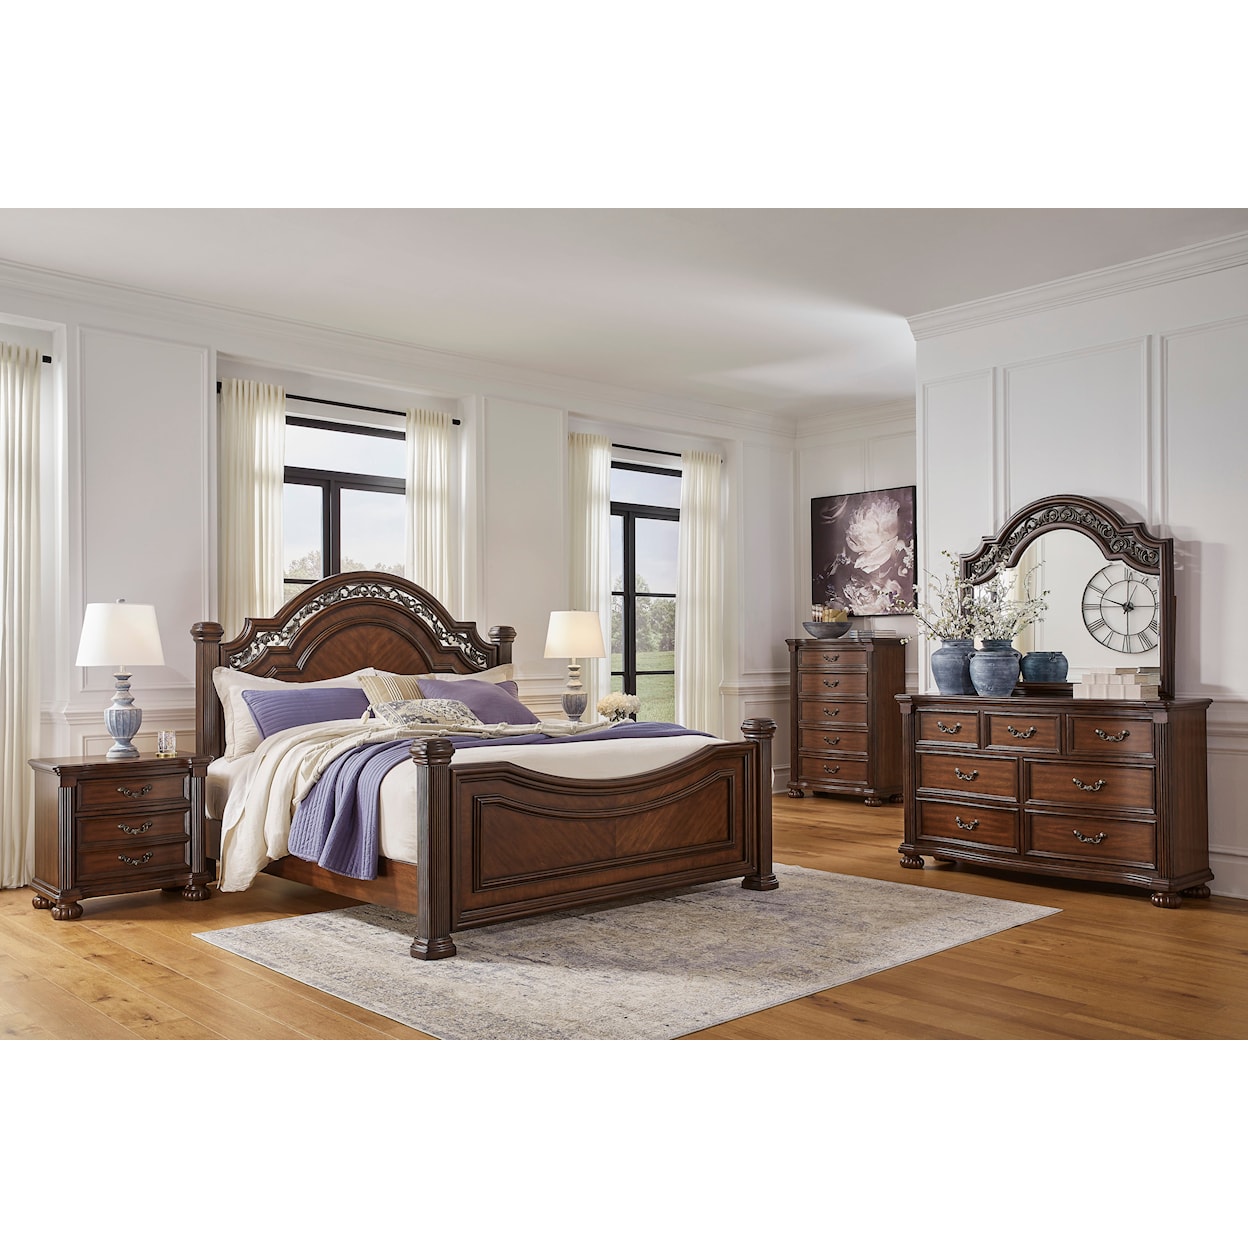 Ashley Furniture Signature Design Lavinton Queen Bedroom Set